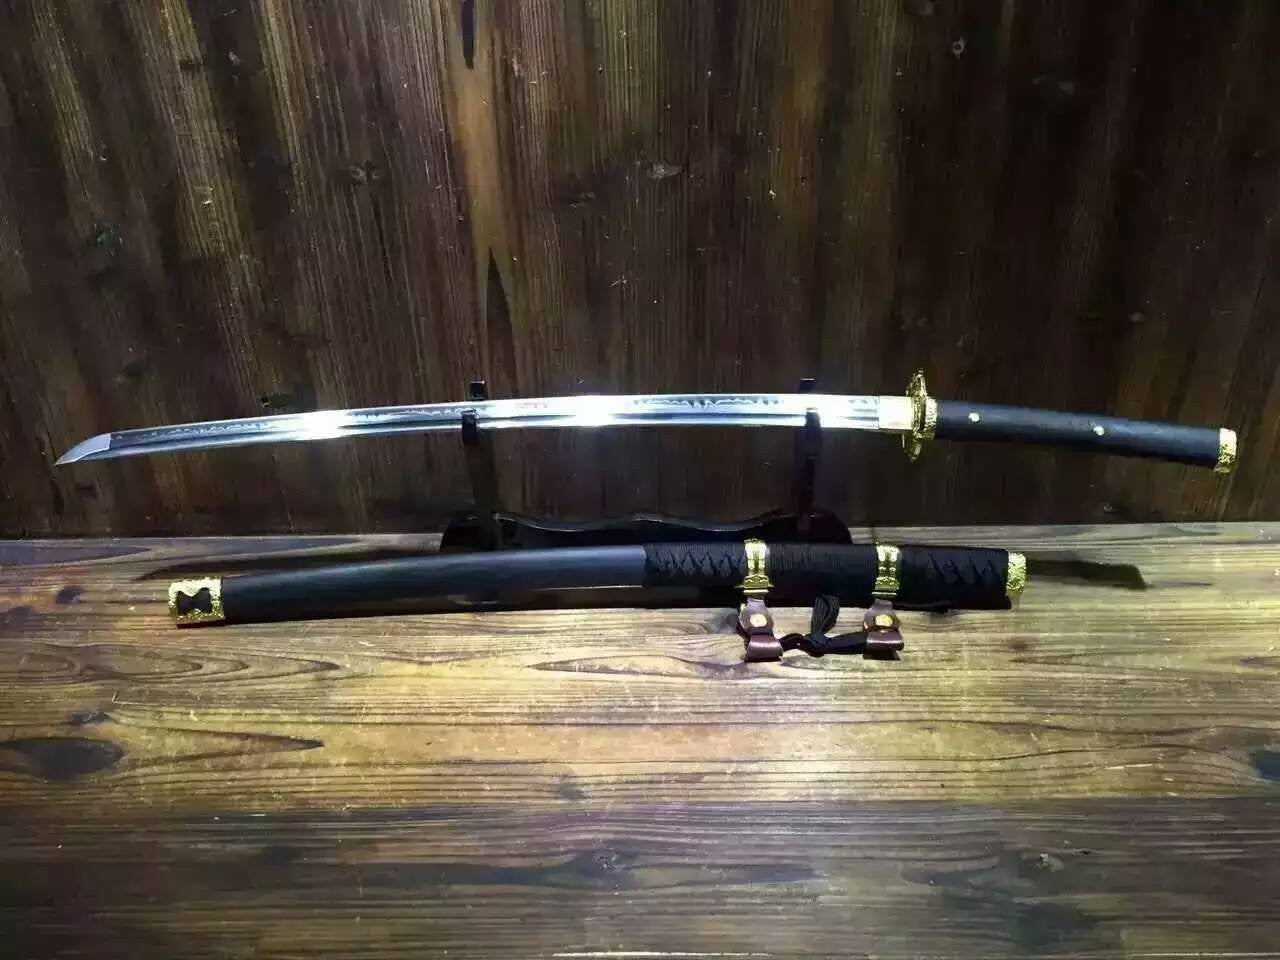 Nihontou Tachi/Katana/High carbon steel/Black wood,Alloy tosogu/Full tang - Chinese sword shop